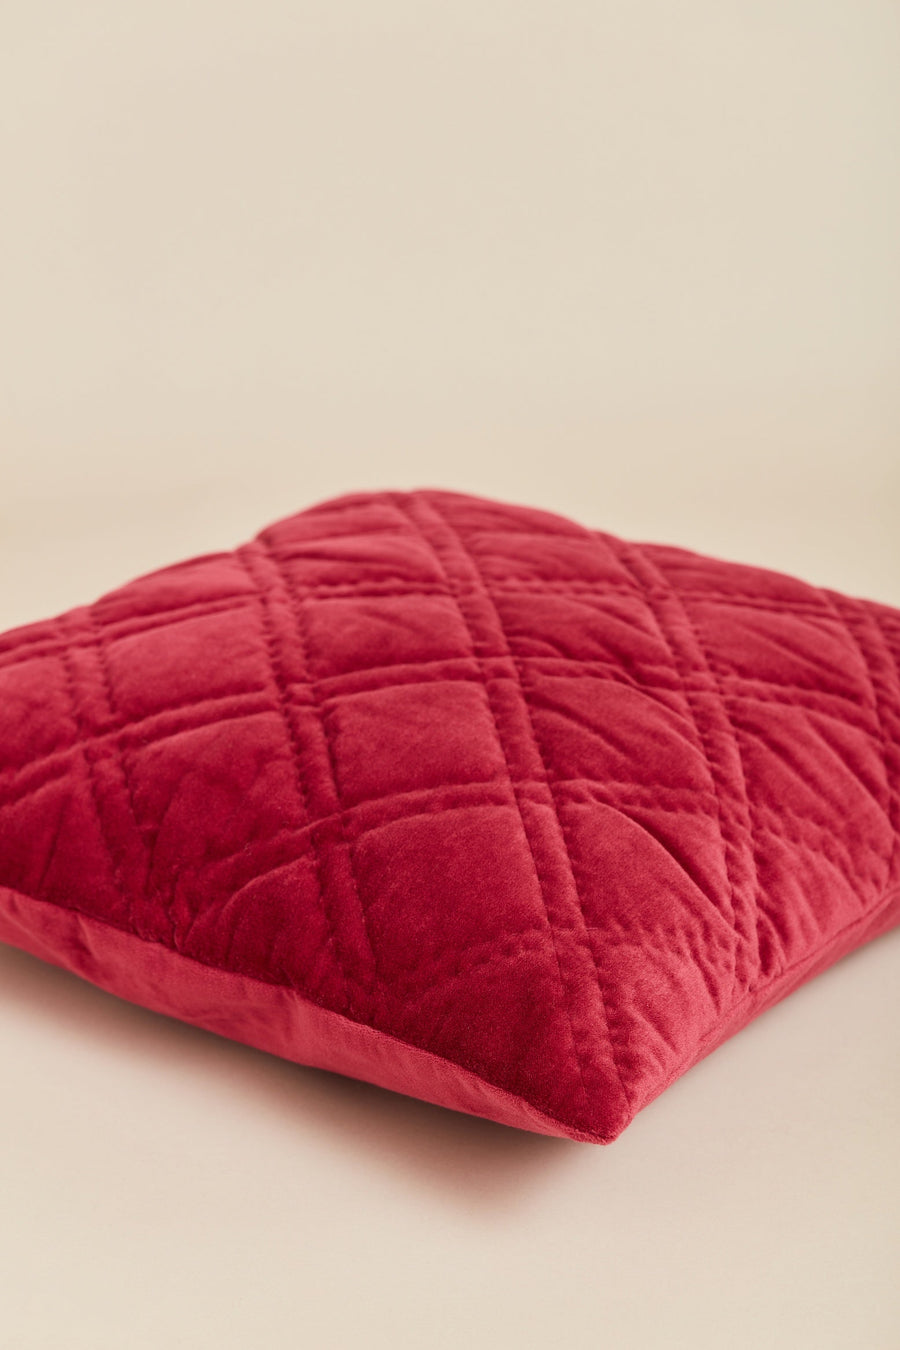 Cushion Cover Earth Red (50cm x 50cm)